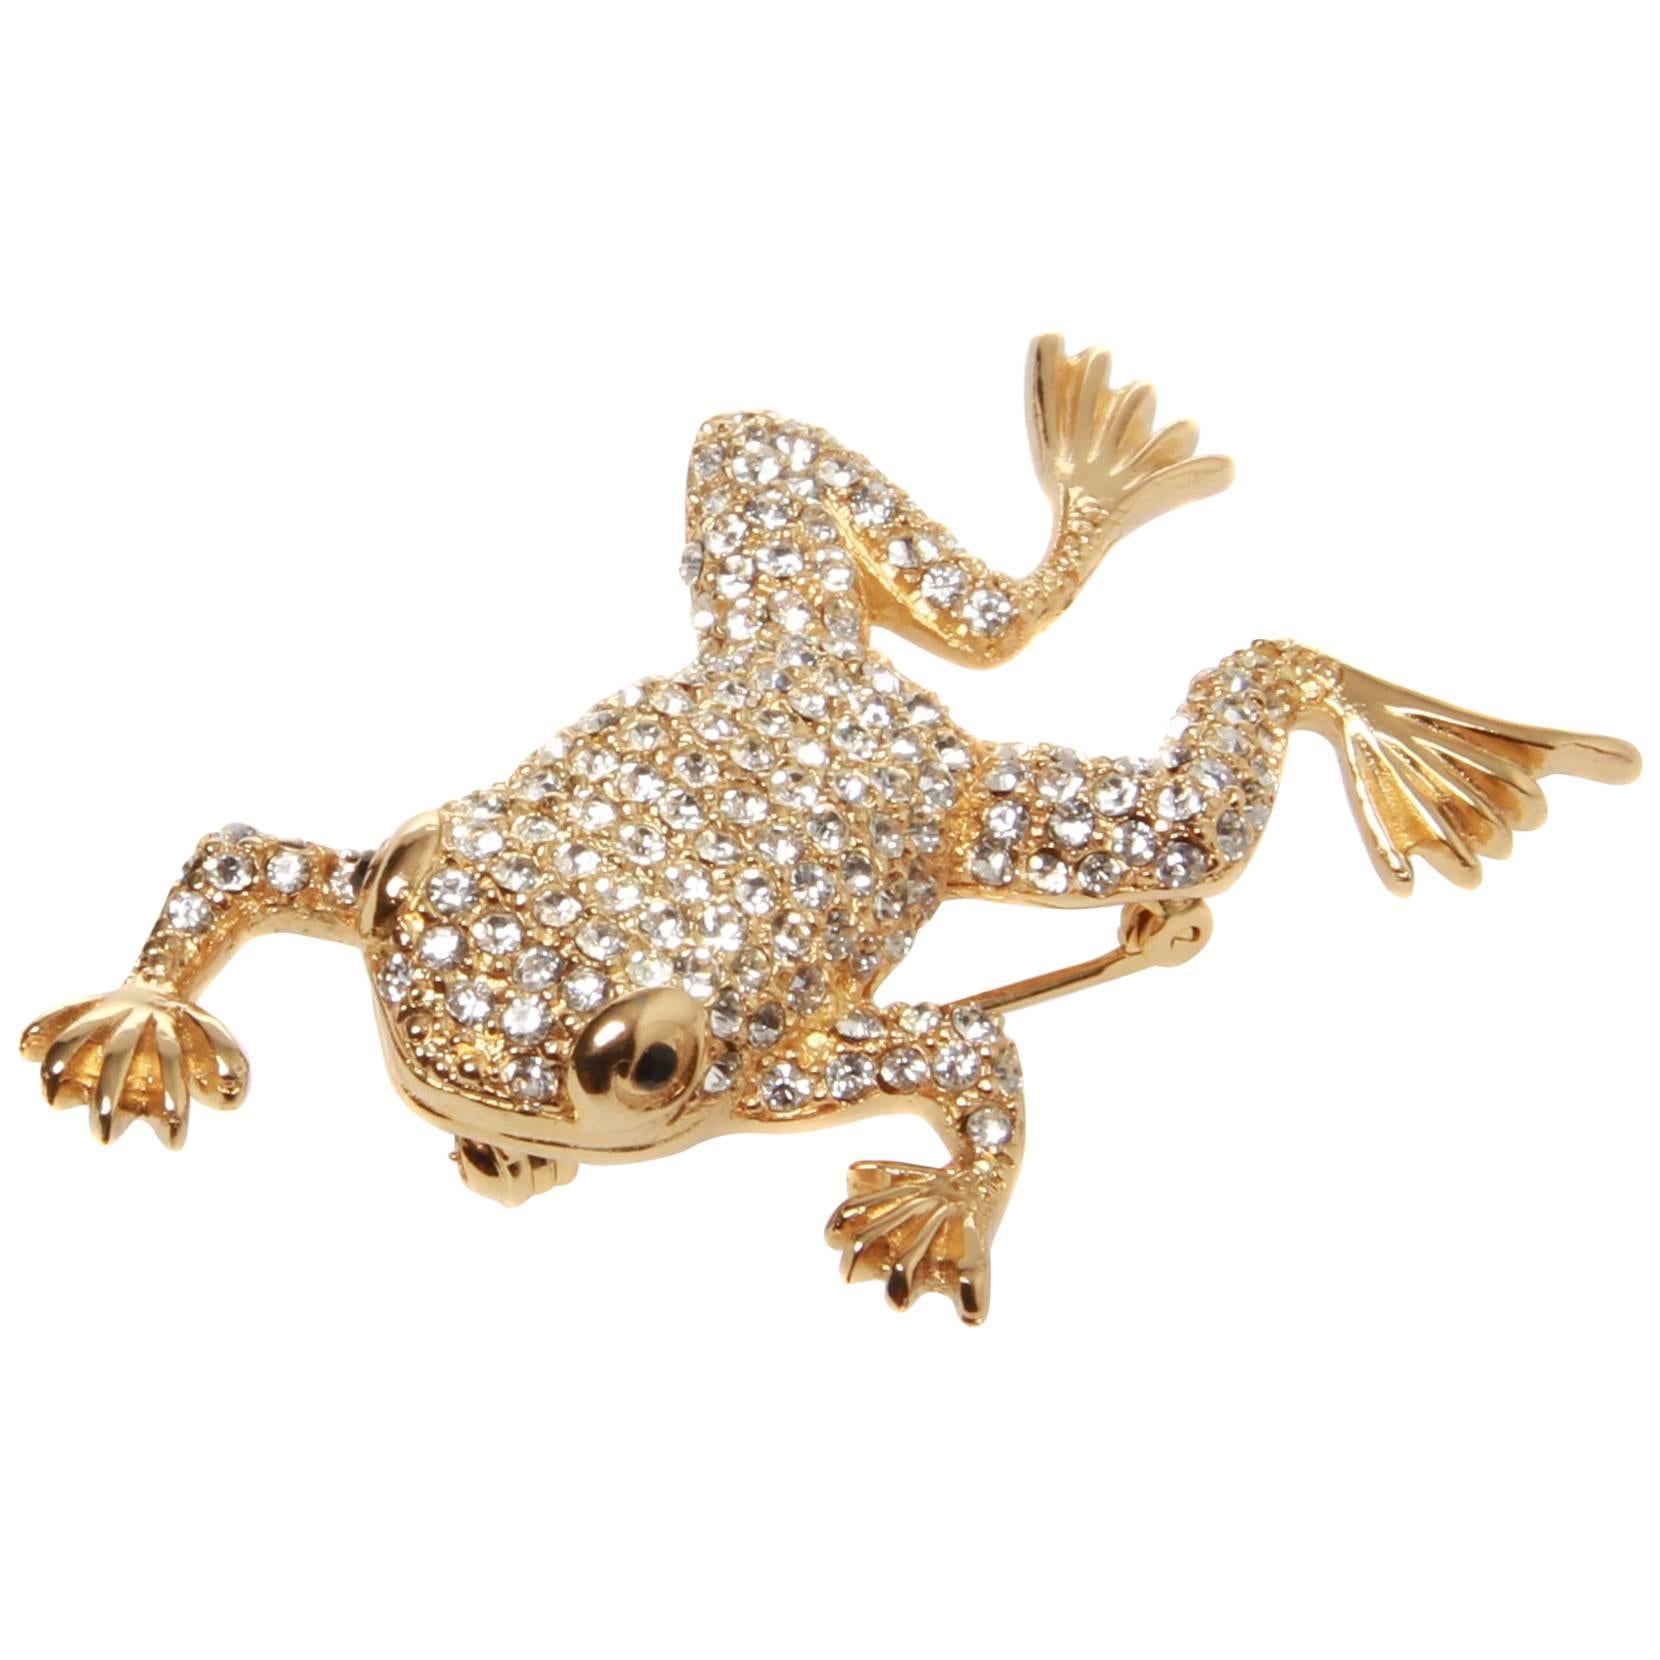 Christian Dior Swarovski Encrusted Frog Brooch